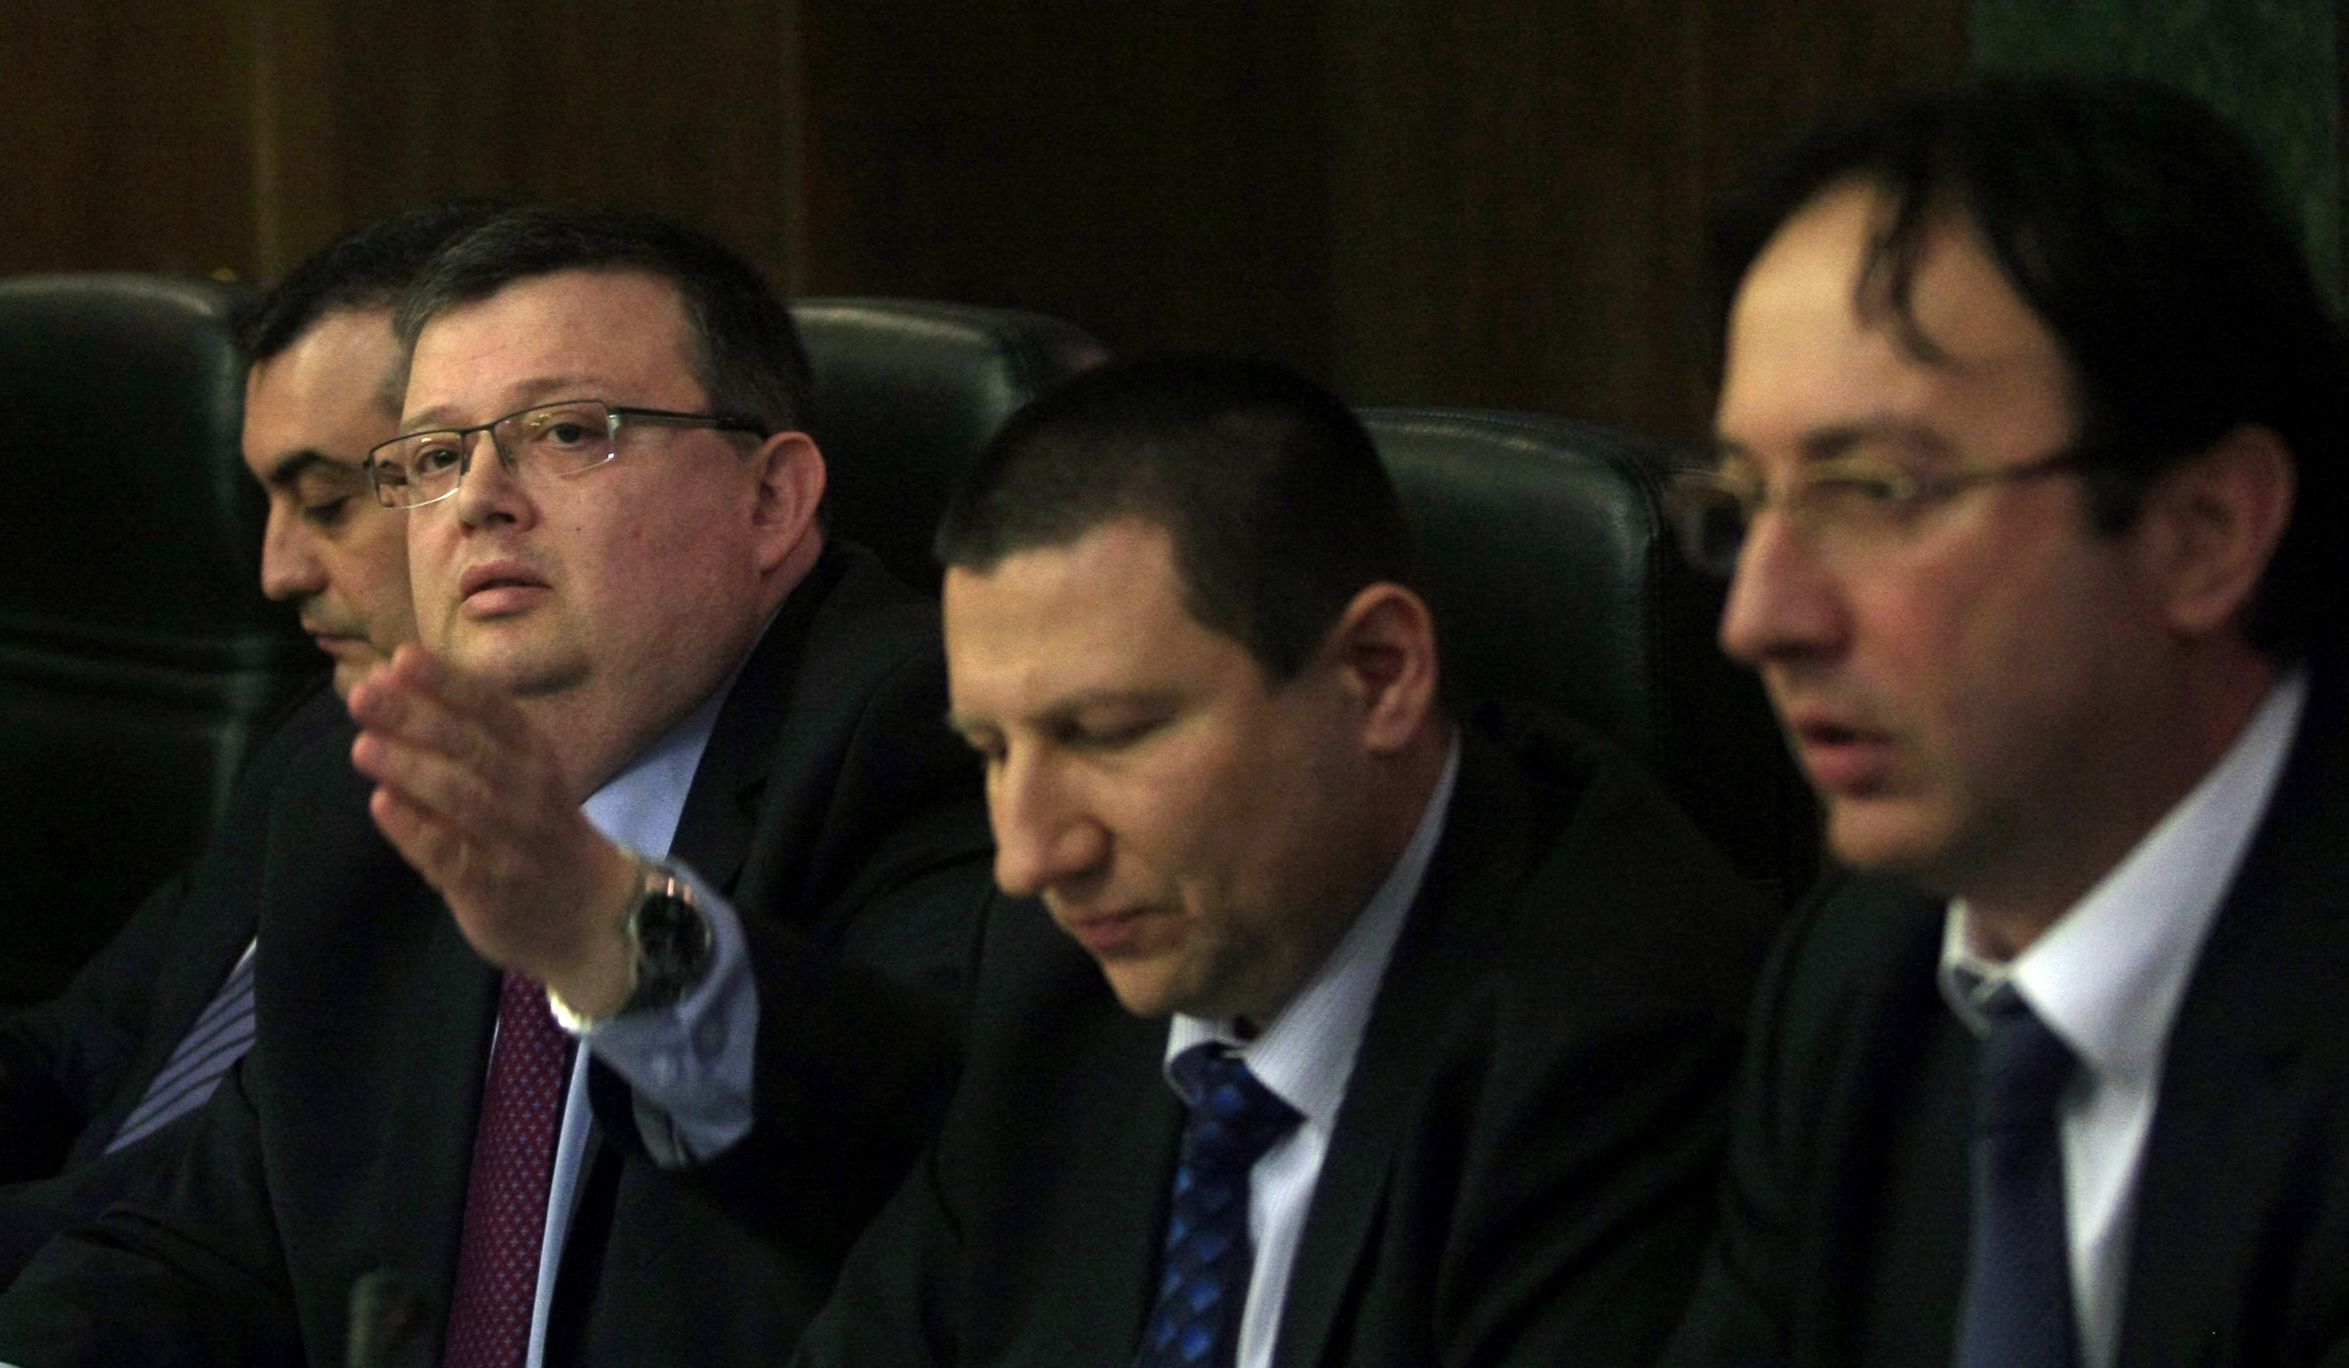 Цацаров даде пресконференция заедно с прокурорите Николай Кокинов, Борислав Сарафов и Роман Василев (отляво надясно)